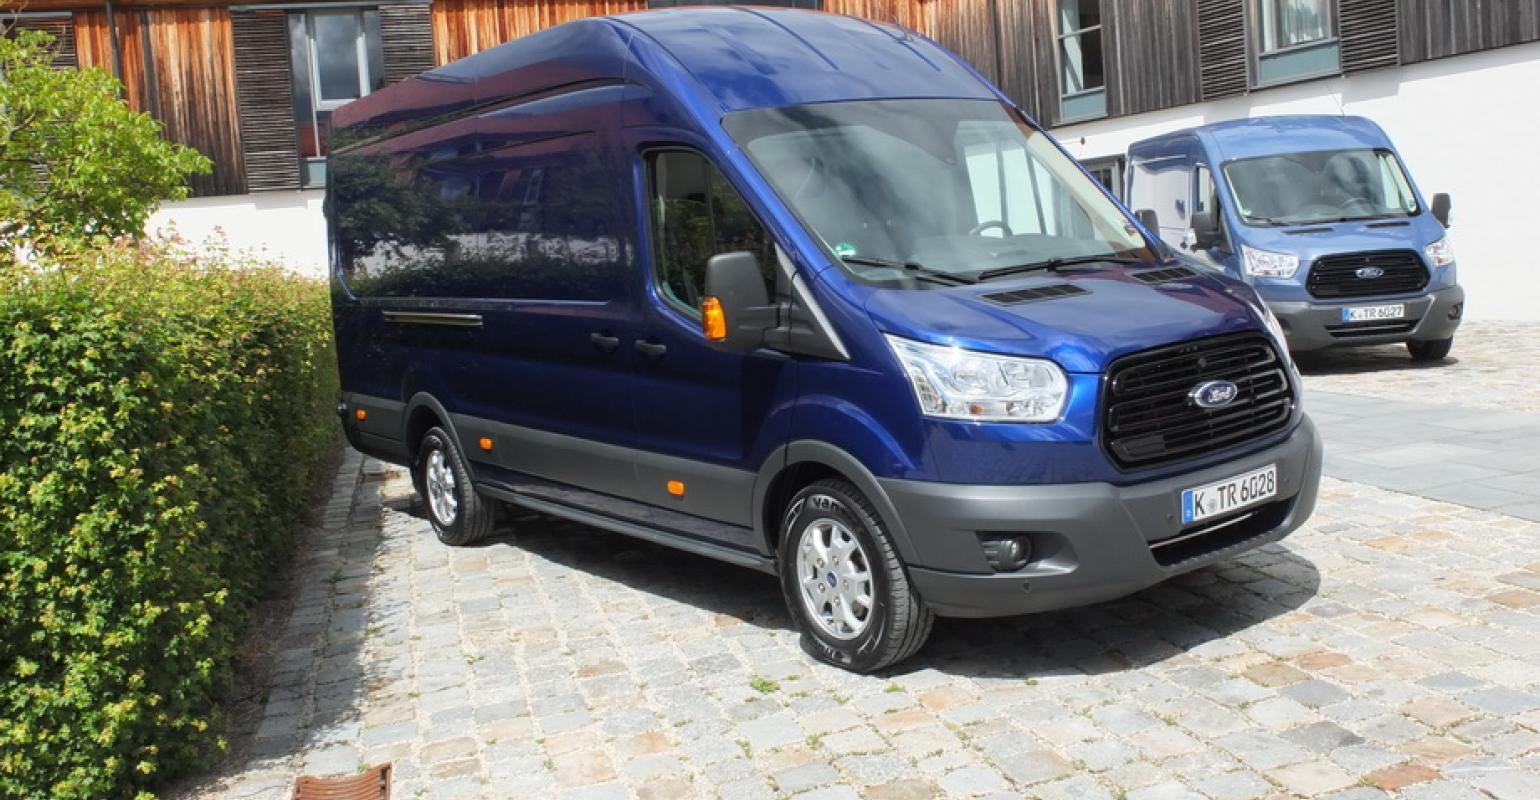 new blue vans